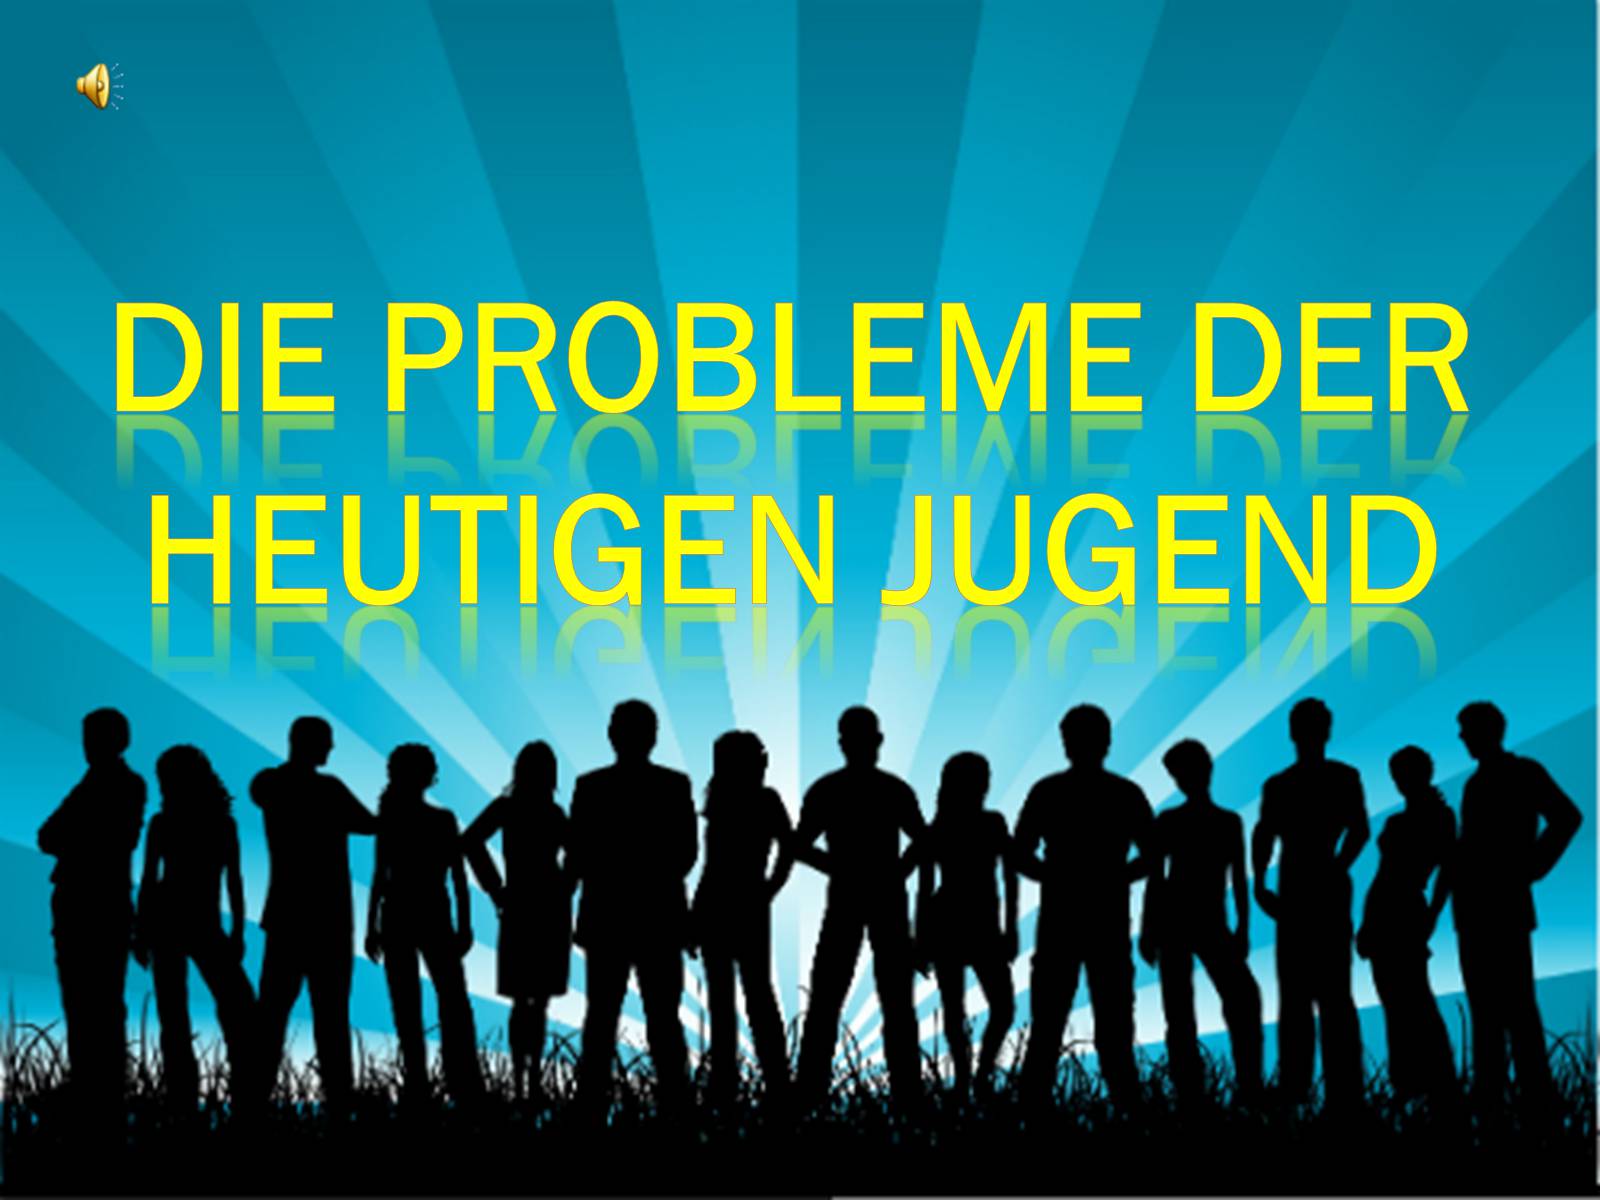 Презентація на тему «Die probleme der he Utigen jugend» - Слайд #1